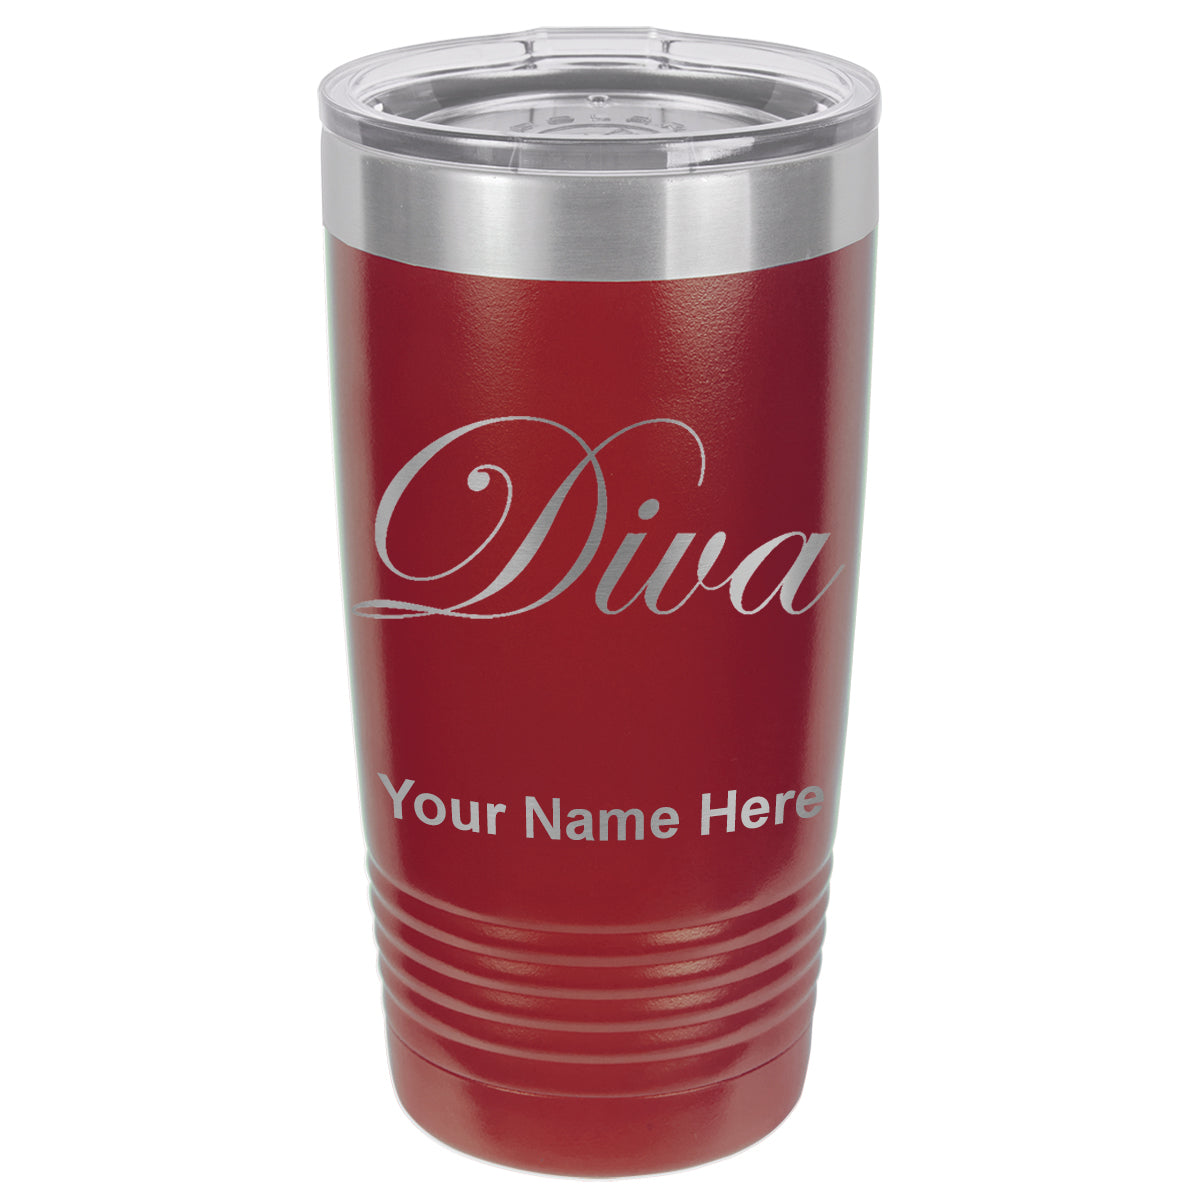 20oz Vacuum Insulated Tumbler Mug, Diva, Personalized Engraving Included